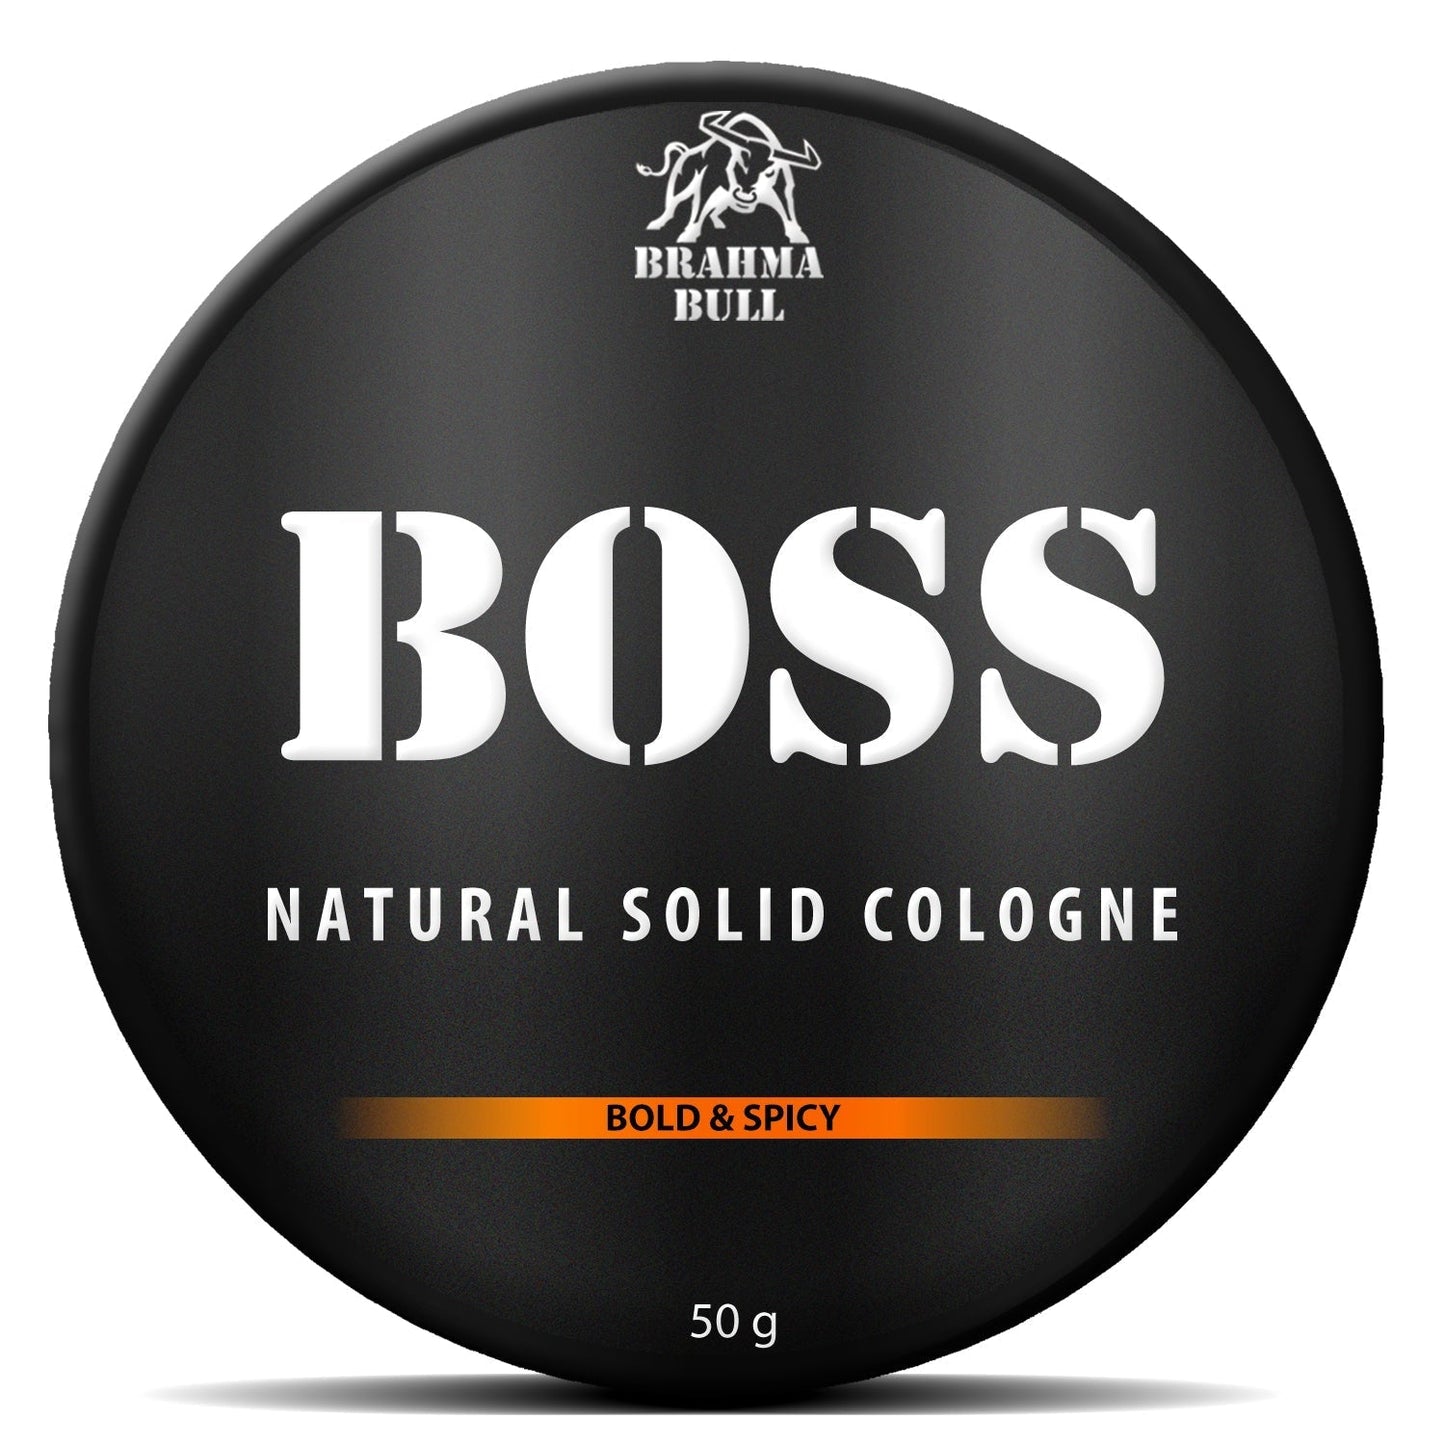 BOSS Natural Solid Cologne - Brahma Bull - Men's Grooming